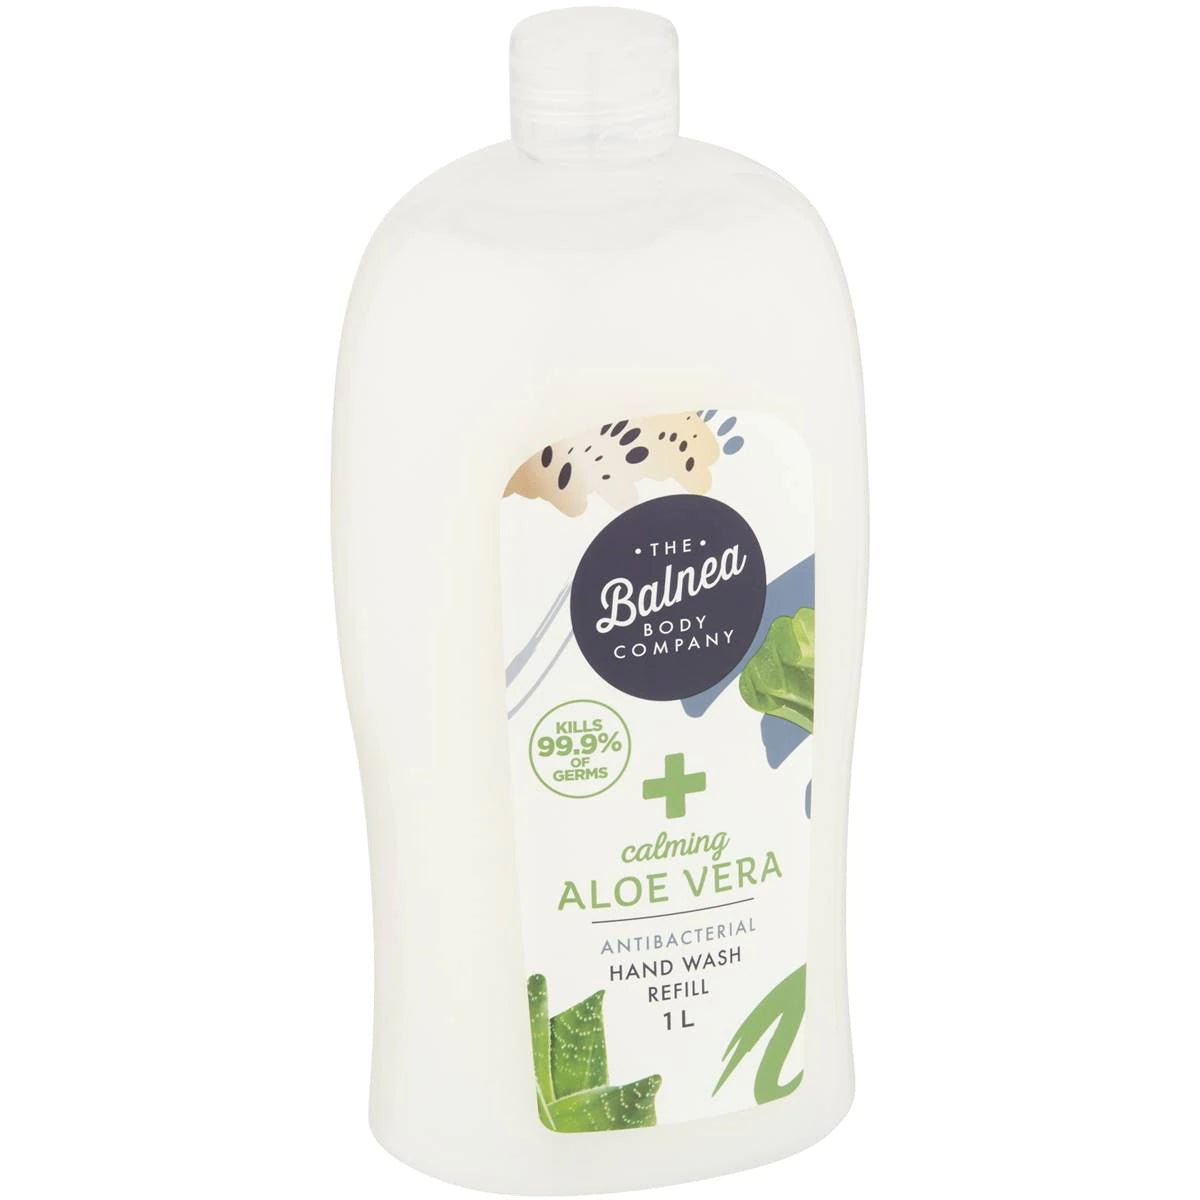 Balnea Aloe Vera Antibacterial Hand Wash Refill 1L